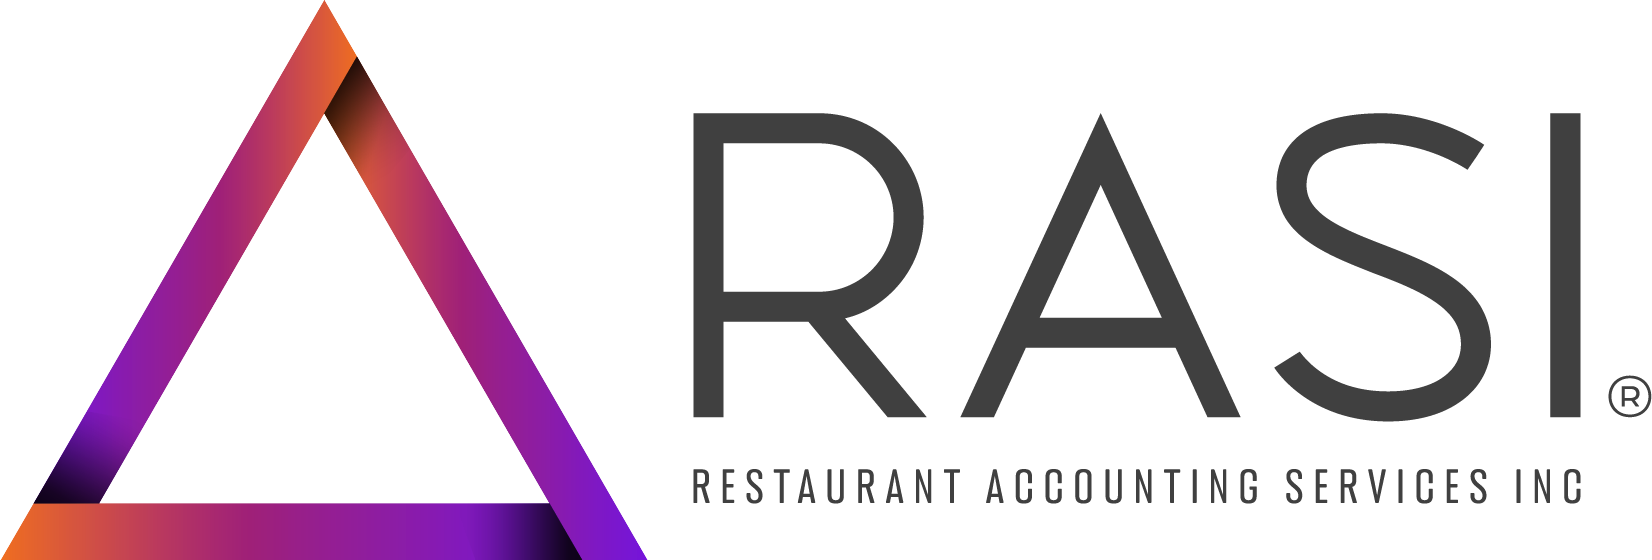 Restaurant Accounting Services (rasi)